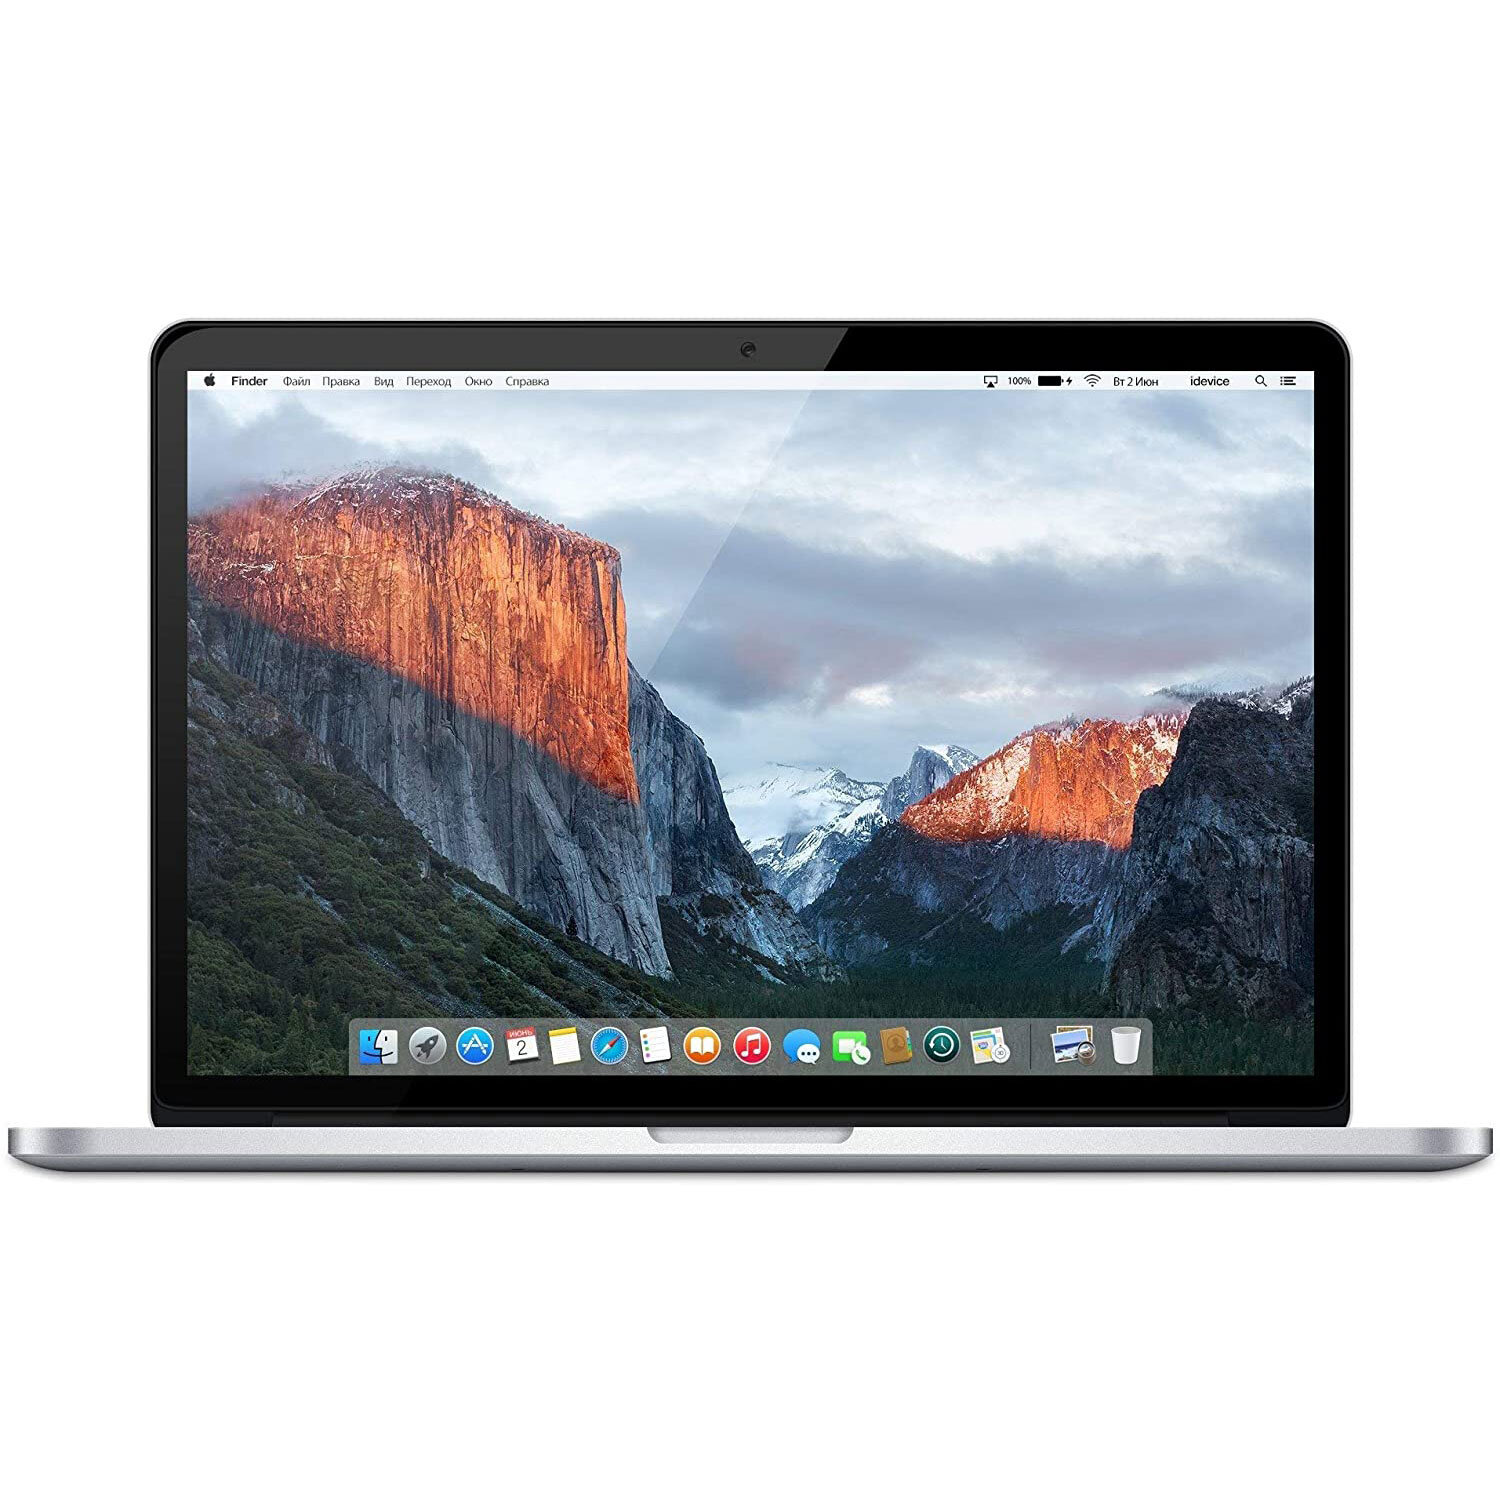 Apple Macbook Pro 15.4 inch Laptop